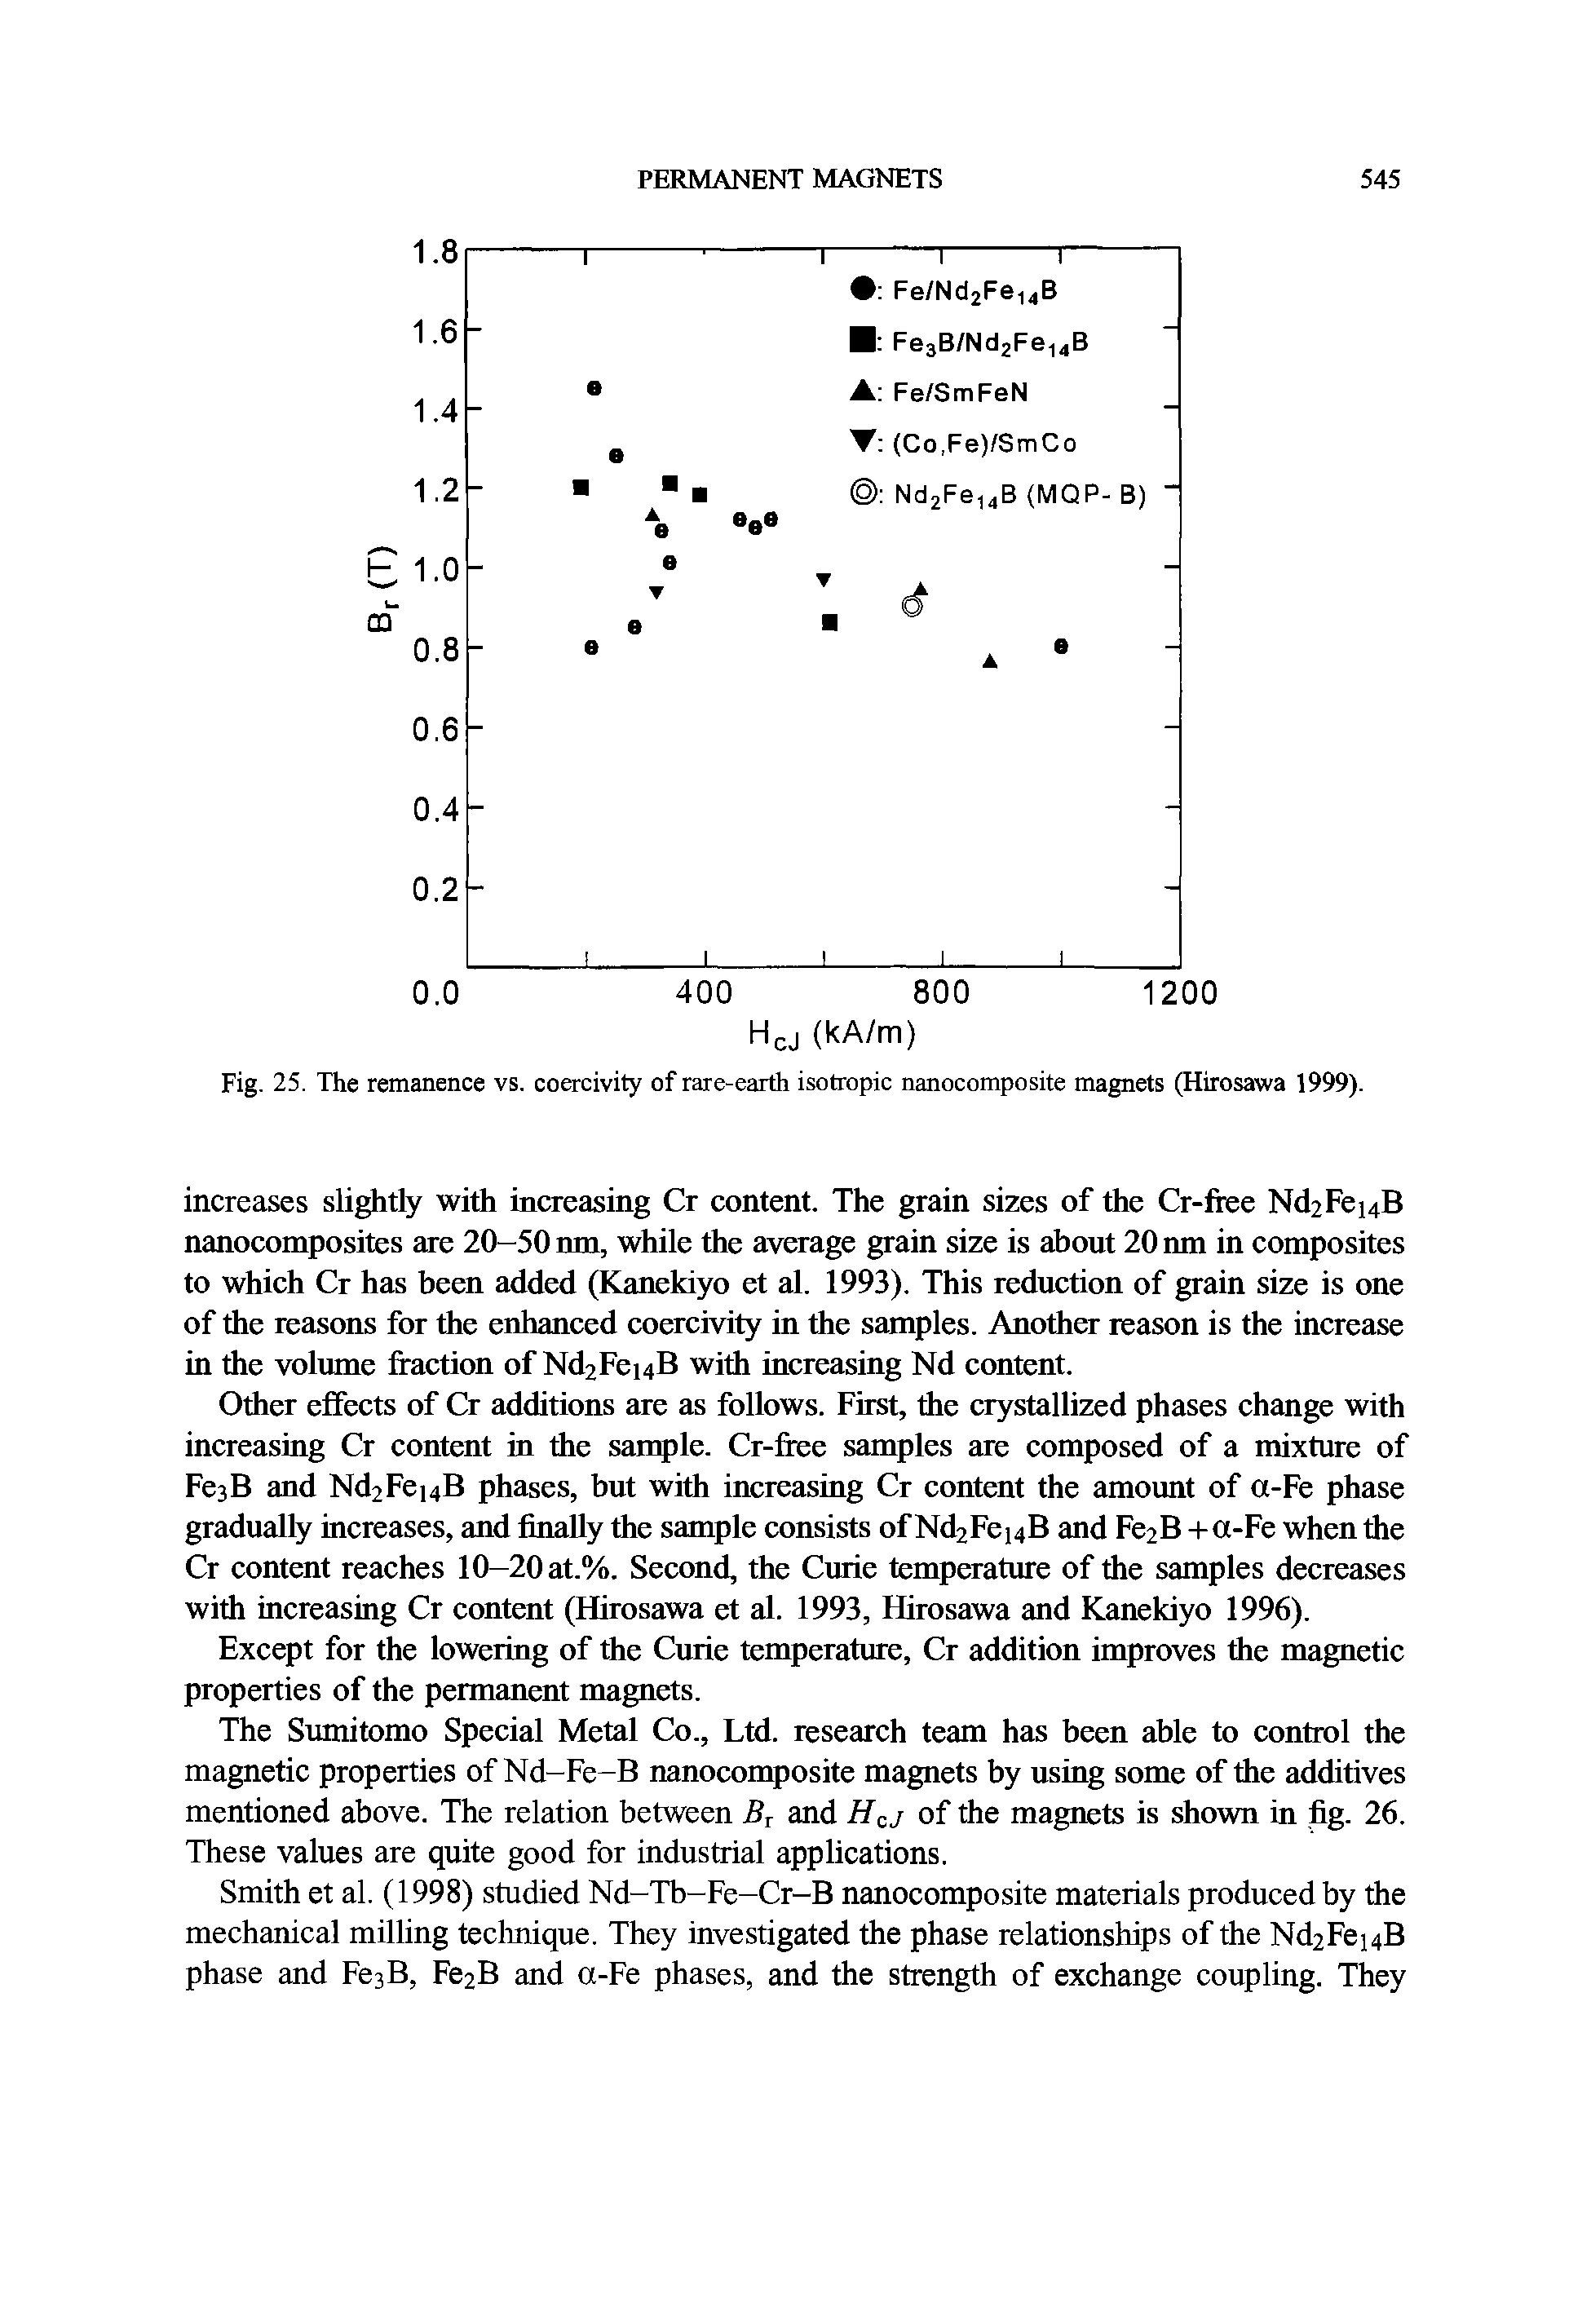 Fig. 25. The remanence vs. coercivity of rare-earth isotropic nanocomposite magnets (Hirosawa 1999).